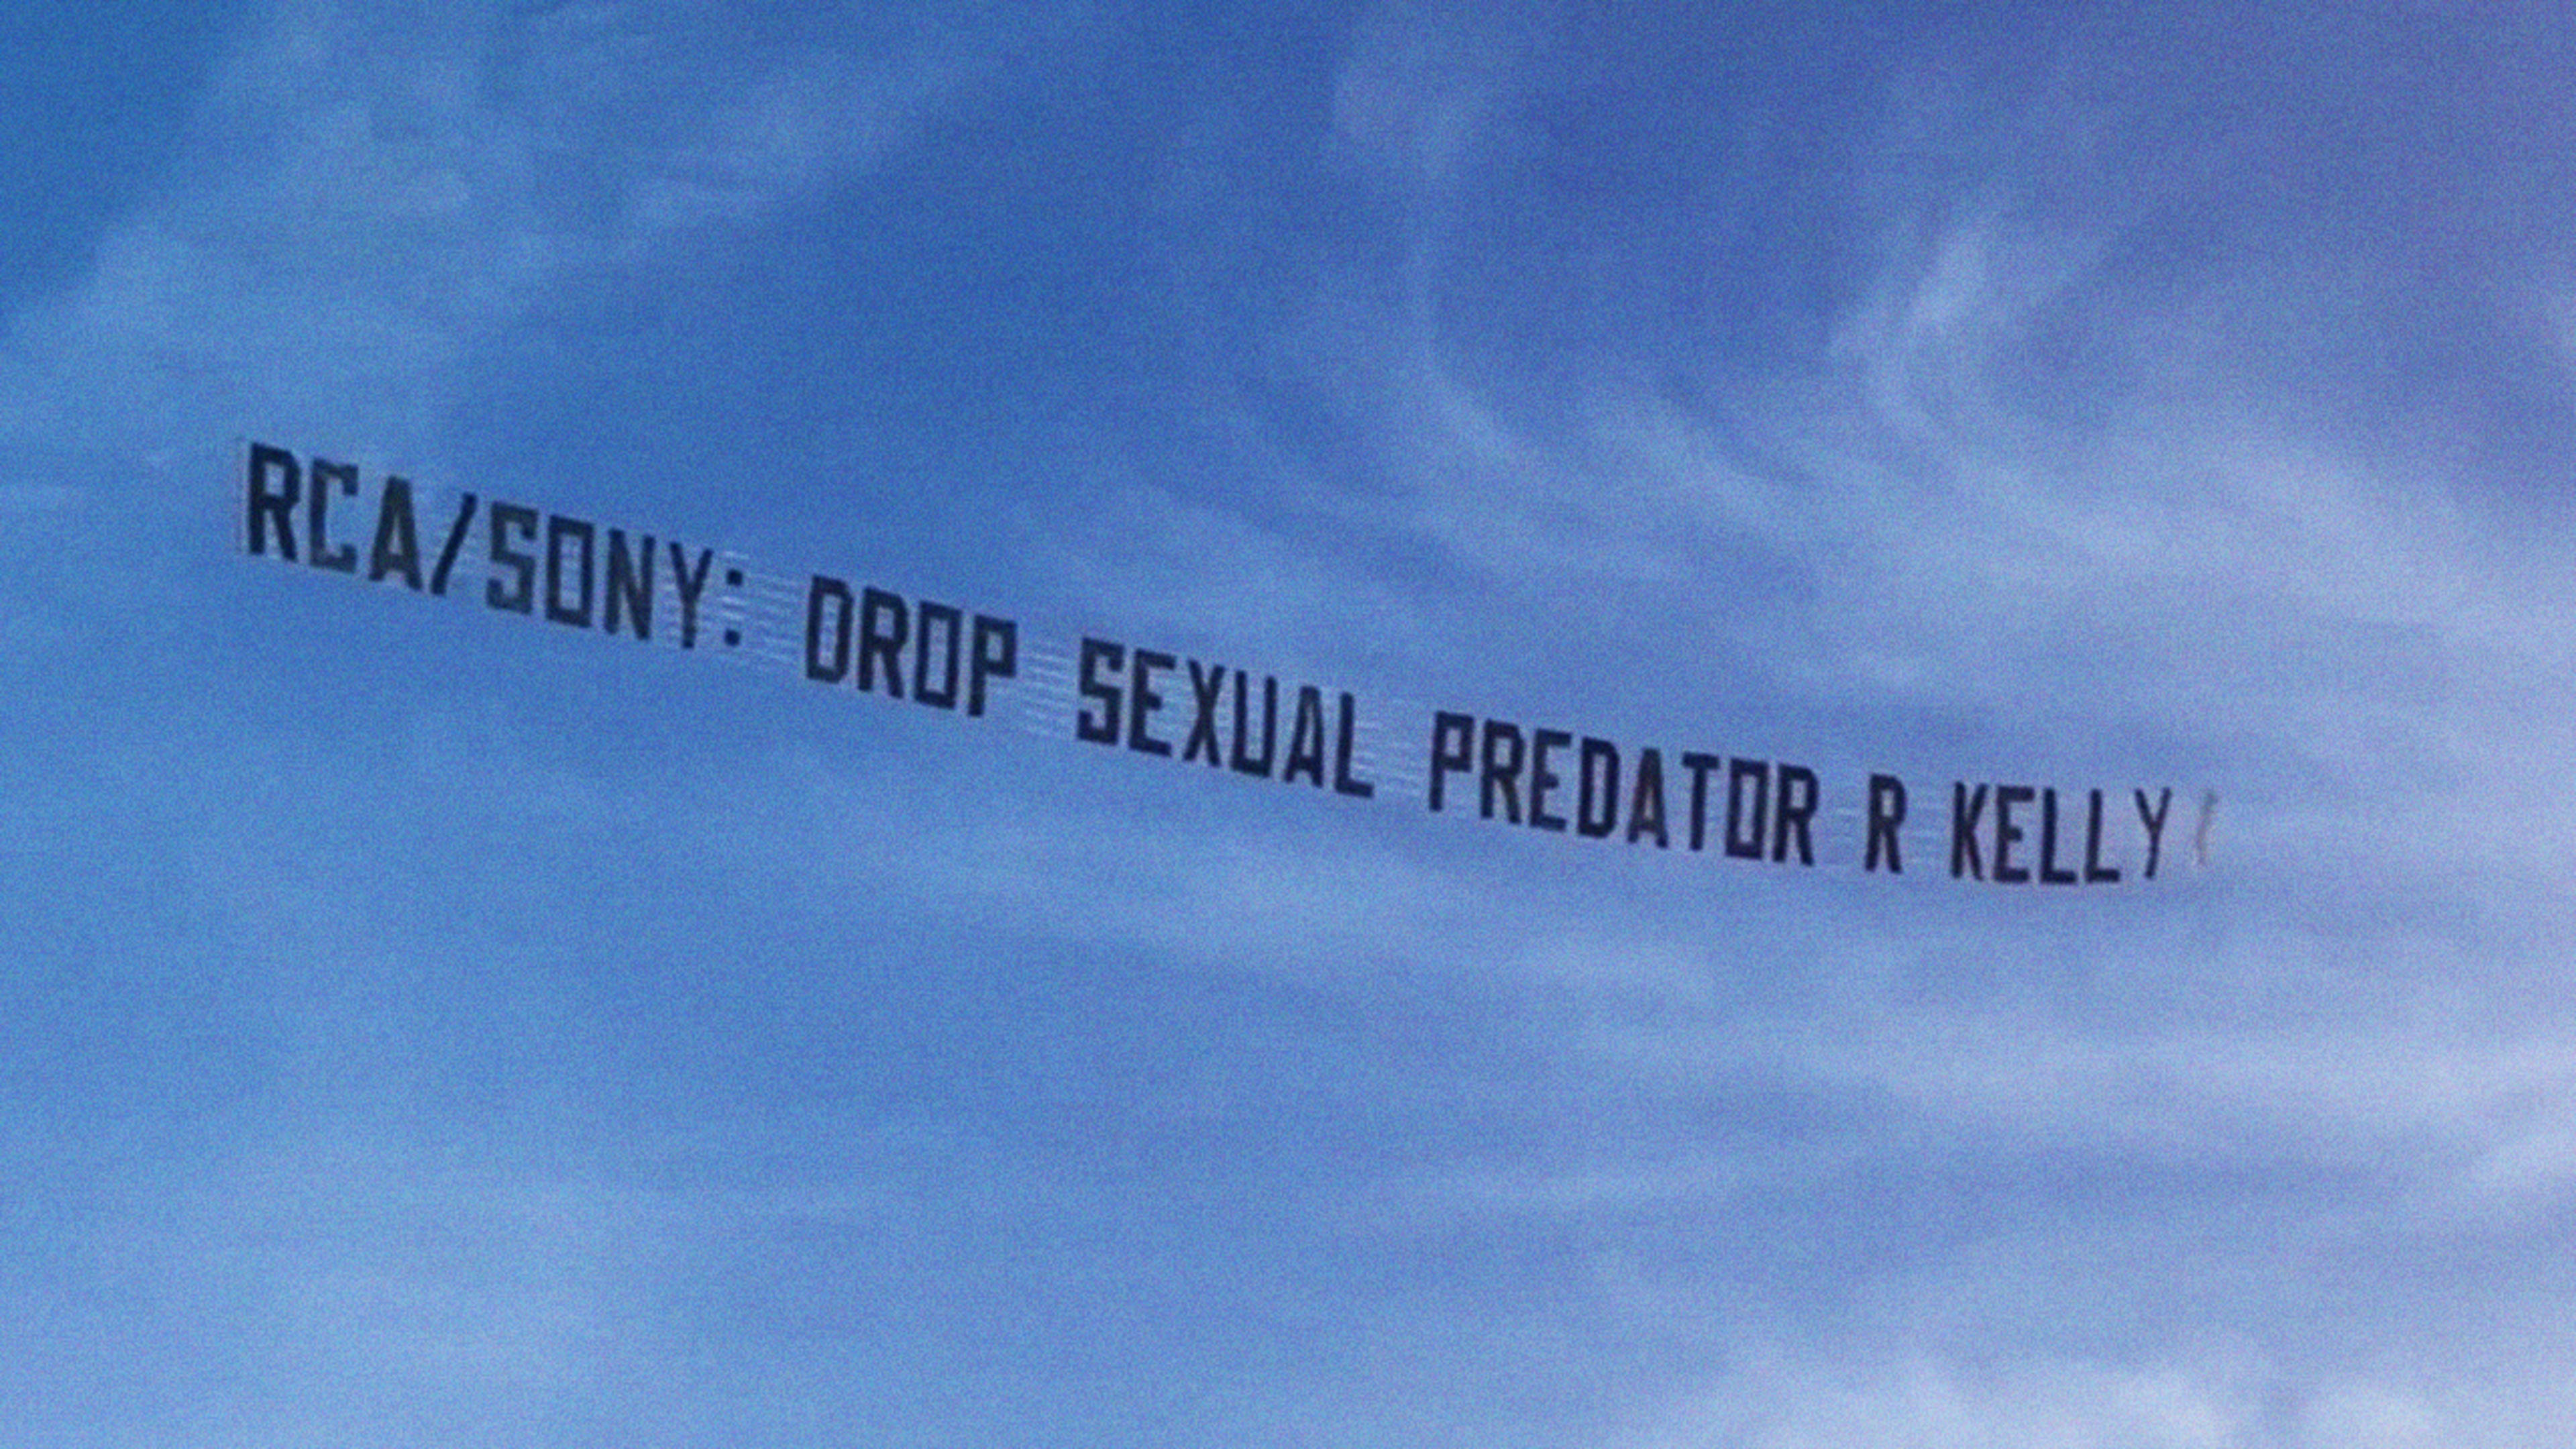 Feminist group flies banner over Culver City demanding RCA-Sony drop R. Kelly